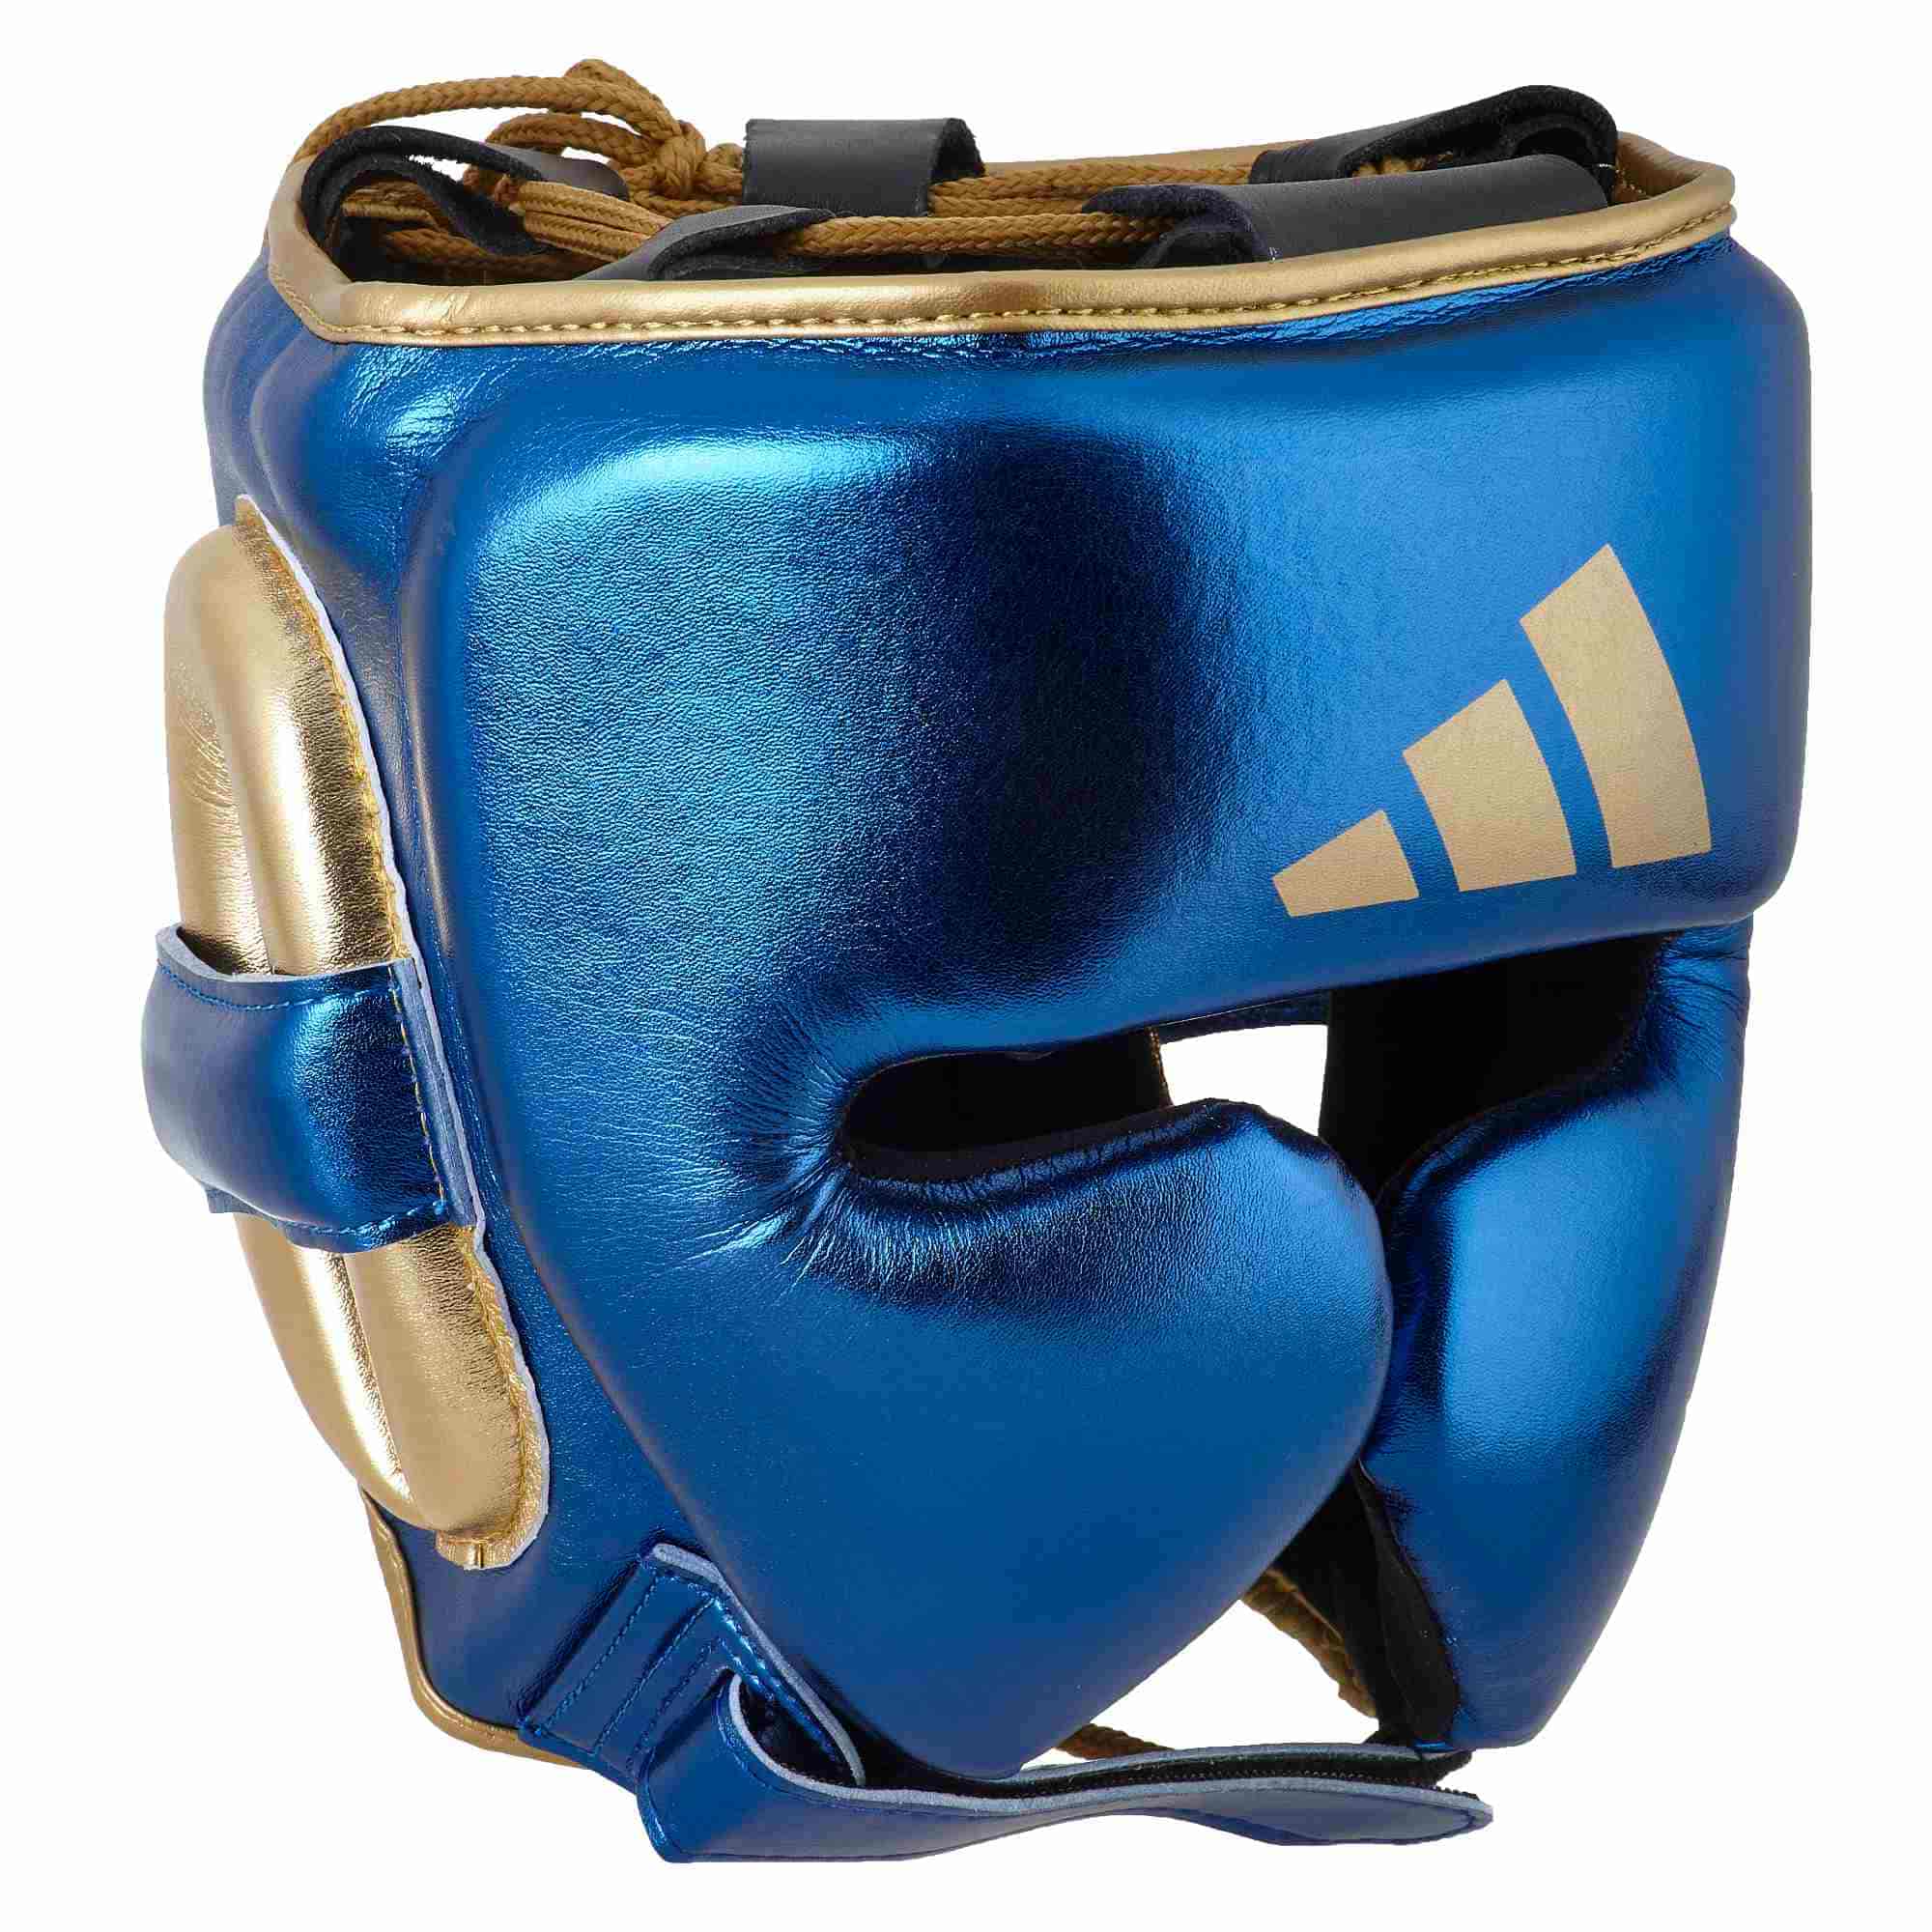 Buy Adidas Head Guard adiStar Pro Blue/Gold online ✓ - emparor Fight Shop